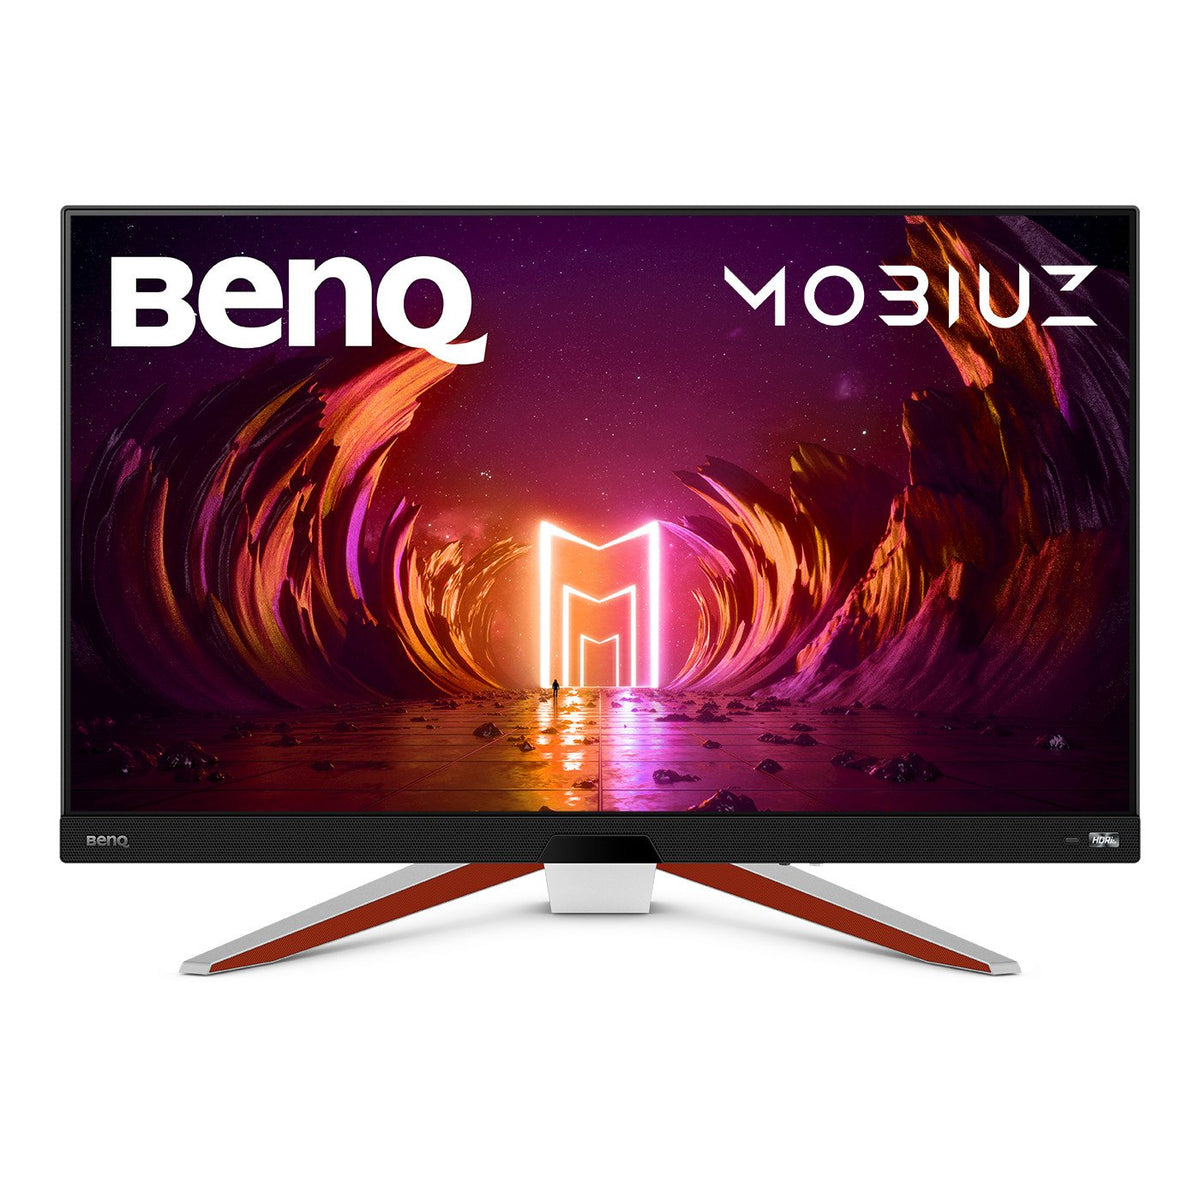 BenQ Mobiuz EX2710U - Monitor LCD - 27" - 3840 x 2160 4K @ 144 Hz - IPS - 600 cd/m² - 1000:1 - DisplayHDR 600 - 1 ms - 2xHDMI, DisplayPort - altifalantes com subwoofer